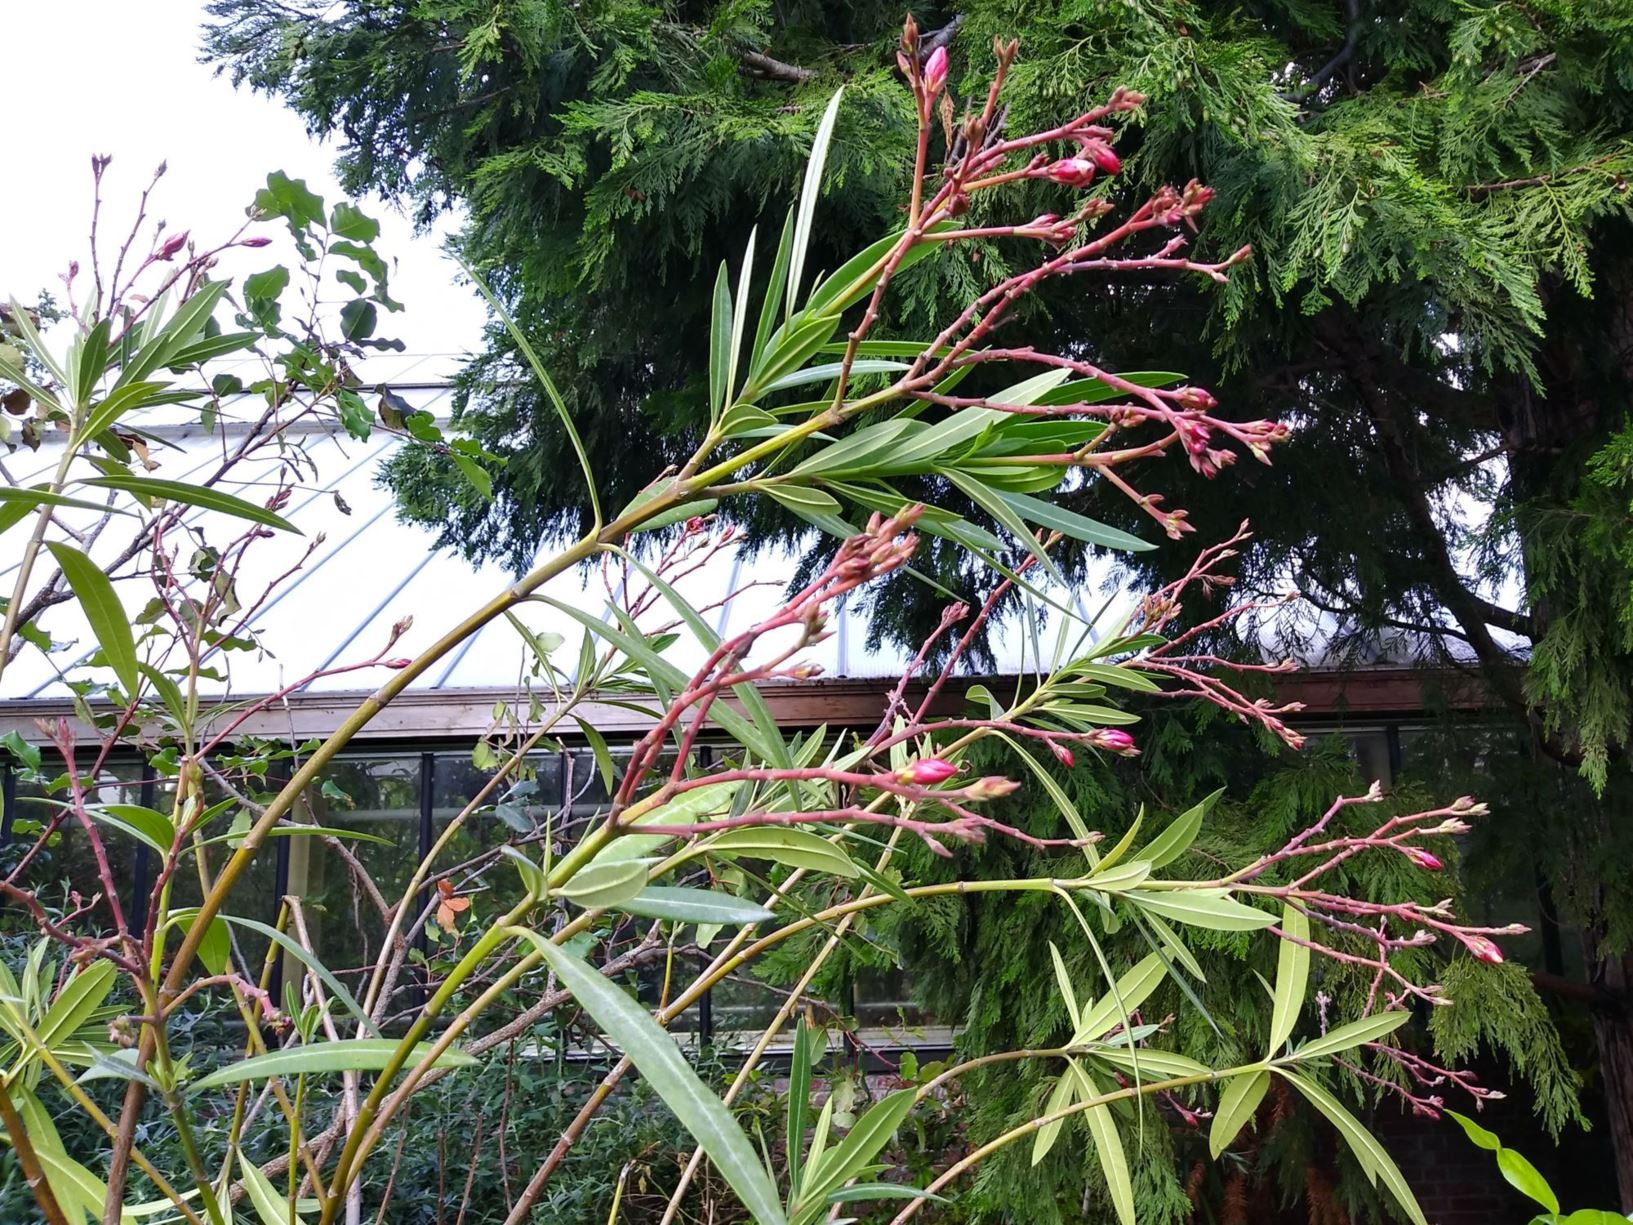 Nerium oleander - Oleander, Oleander, Rose-bay